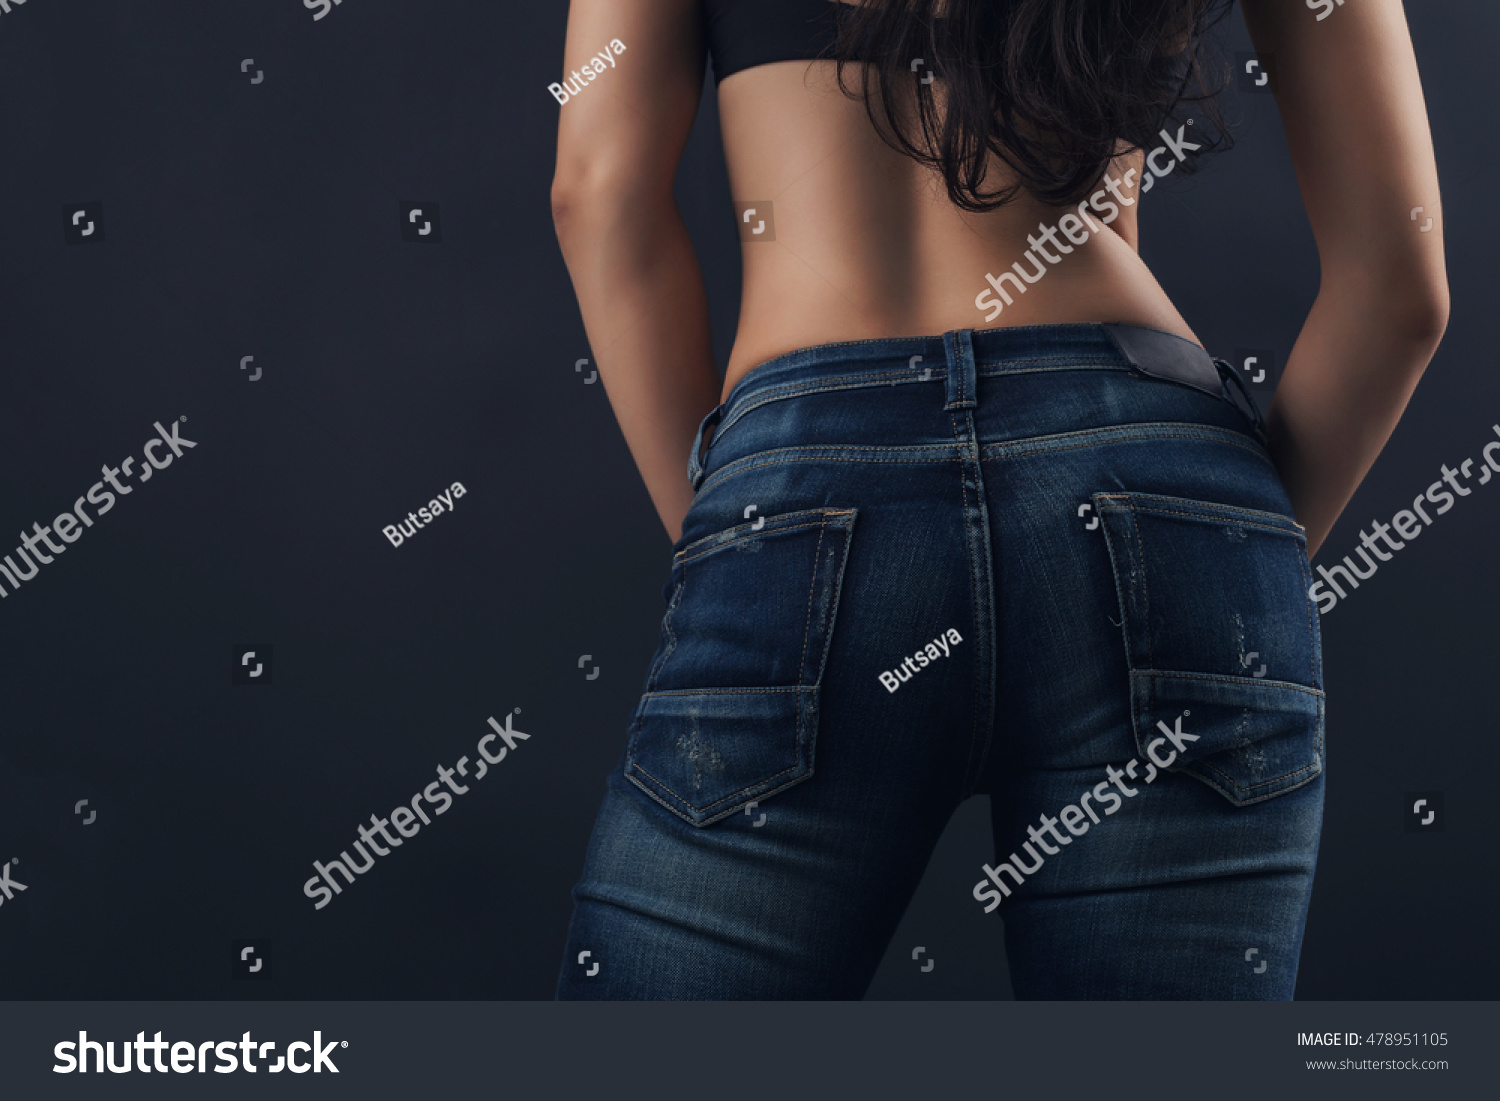 sexy women in jeans